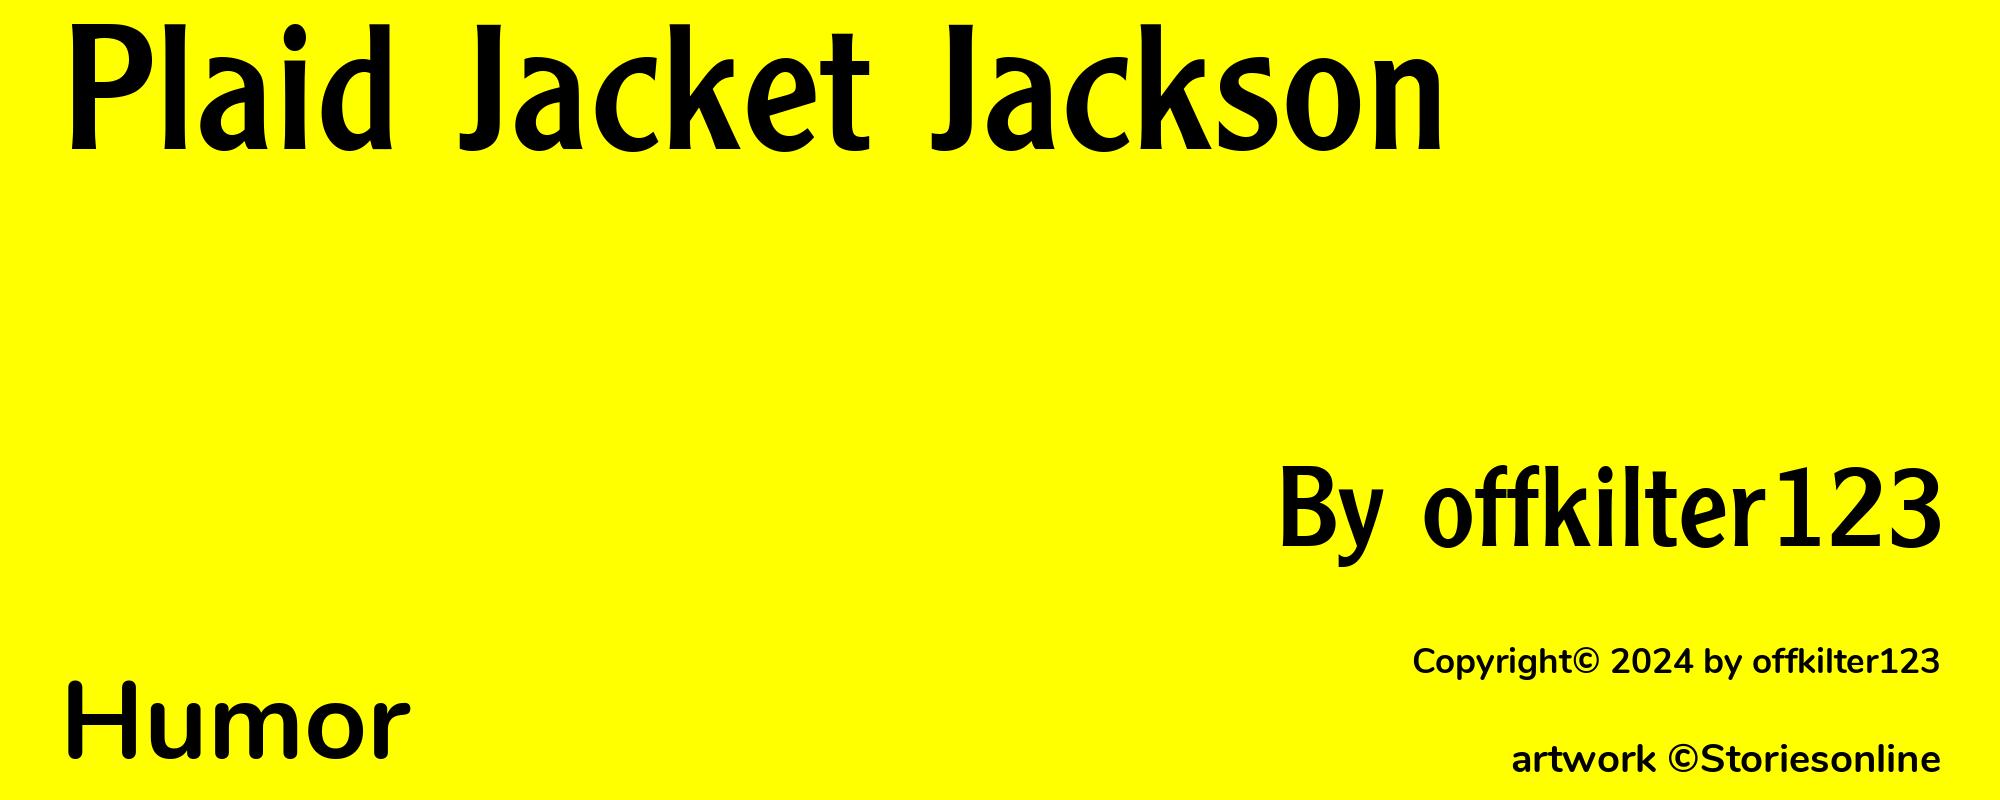 Plaid Jacket Jackson - Cover